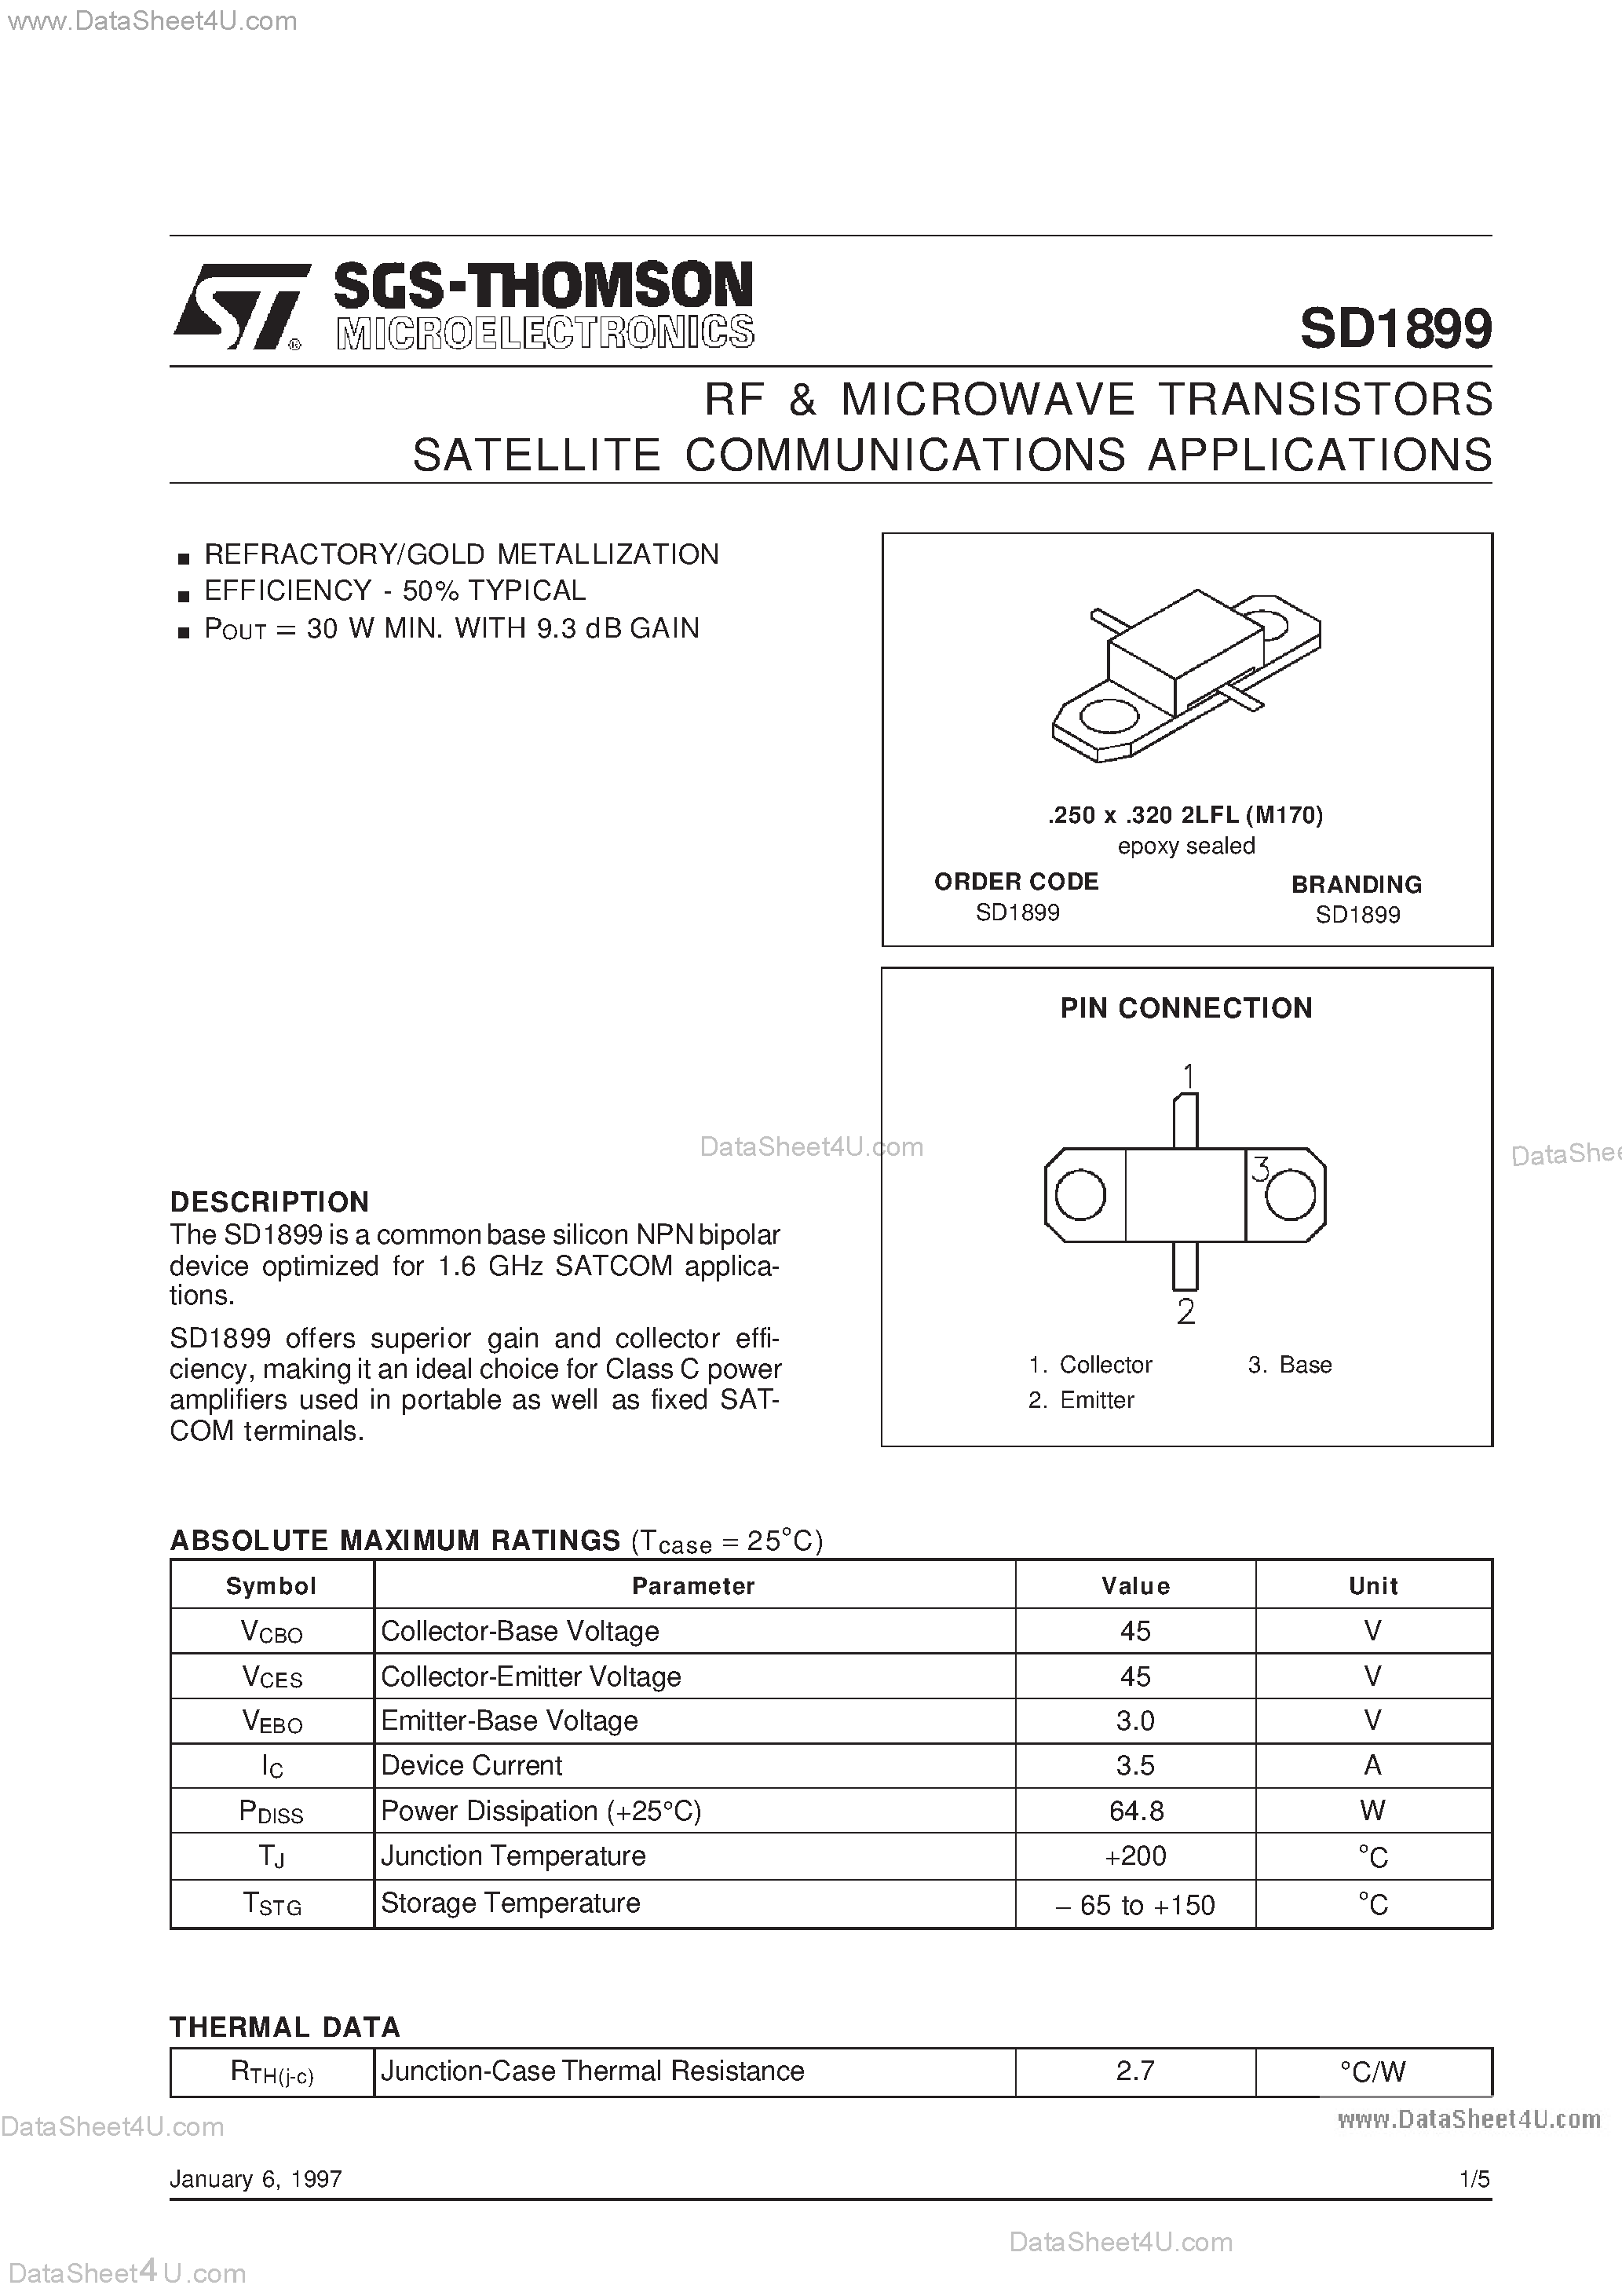 Datasheet SD1899 - RF & MICROWAVE TRANSISTORS SATELLITE COMMUNICATIONS APPLICATIONS page 1